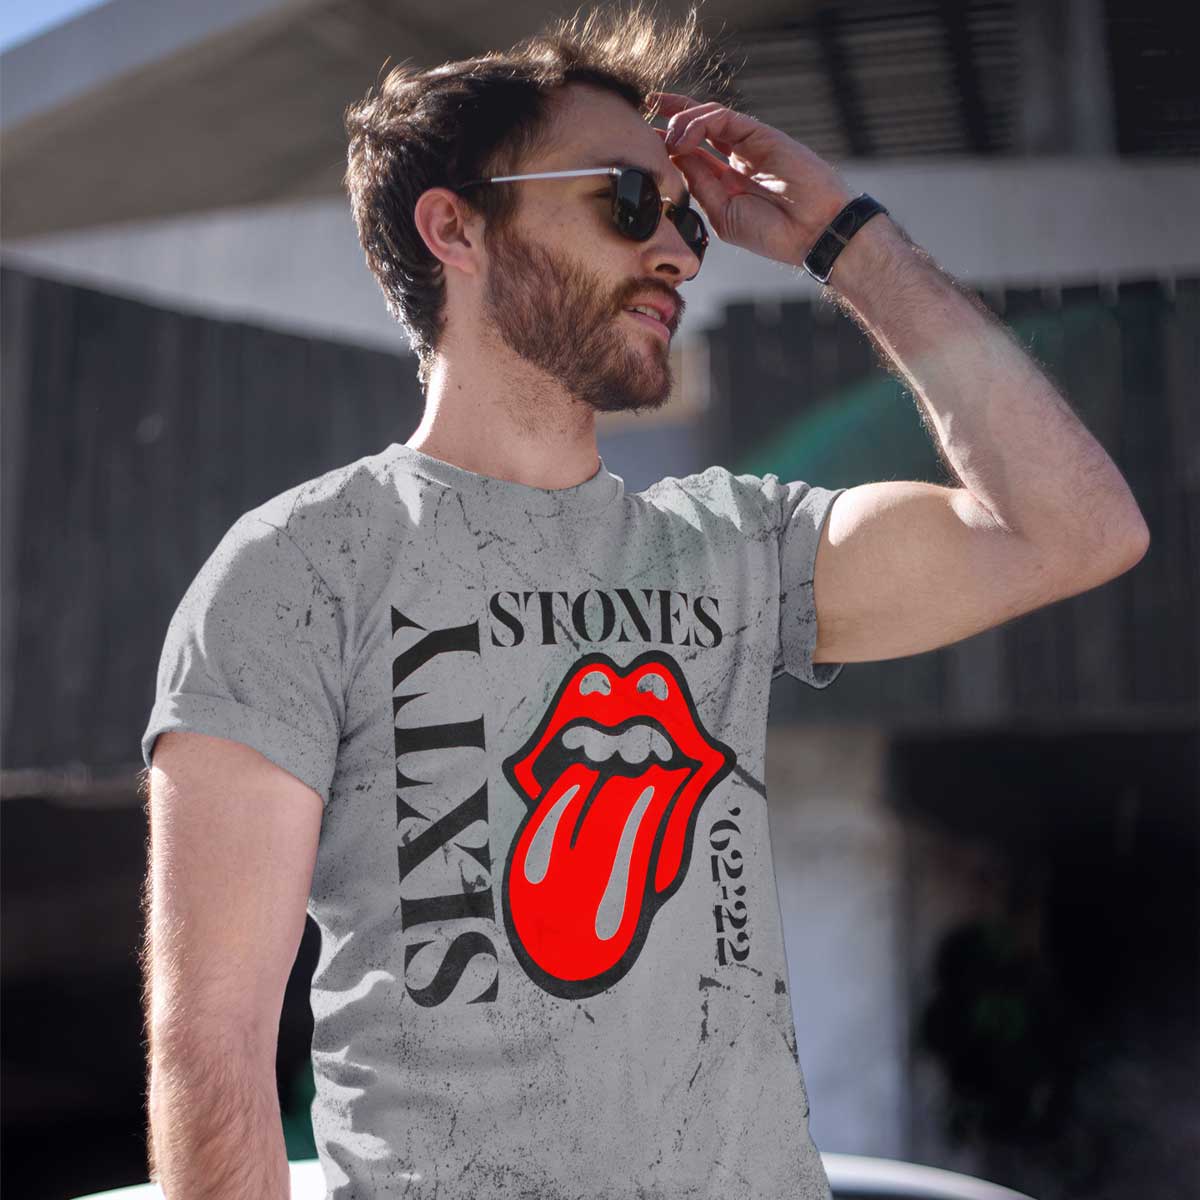 Rolling Stones Shortsleeve T-Shirt in Washed Smoke Grey image number 1